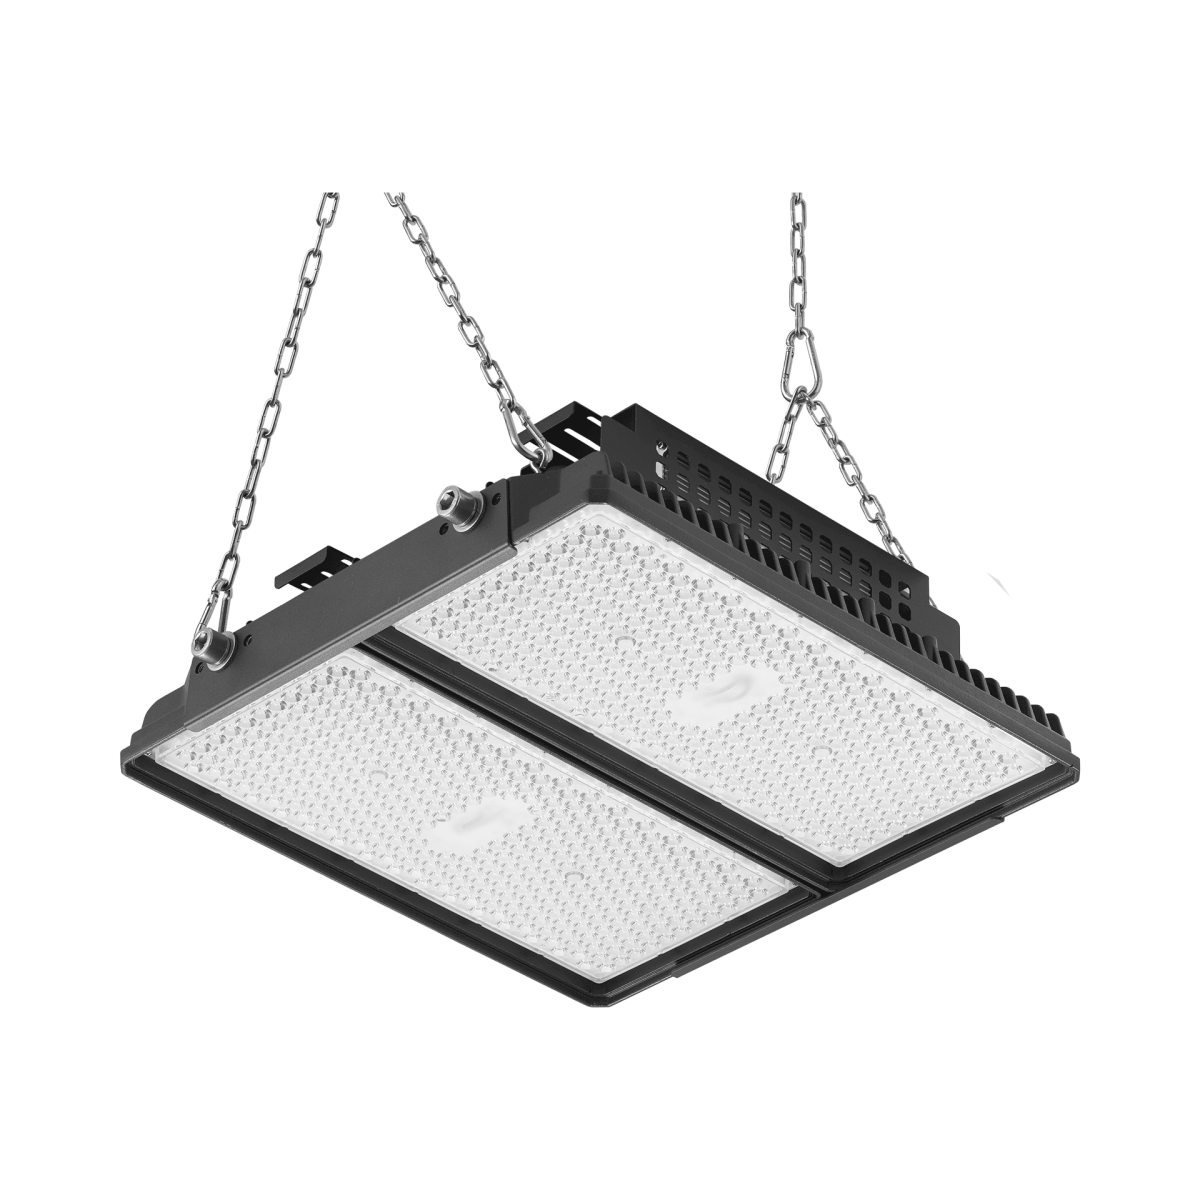 Advanced LED technology has transformed industrial lighting, offering better illumination.